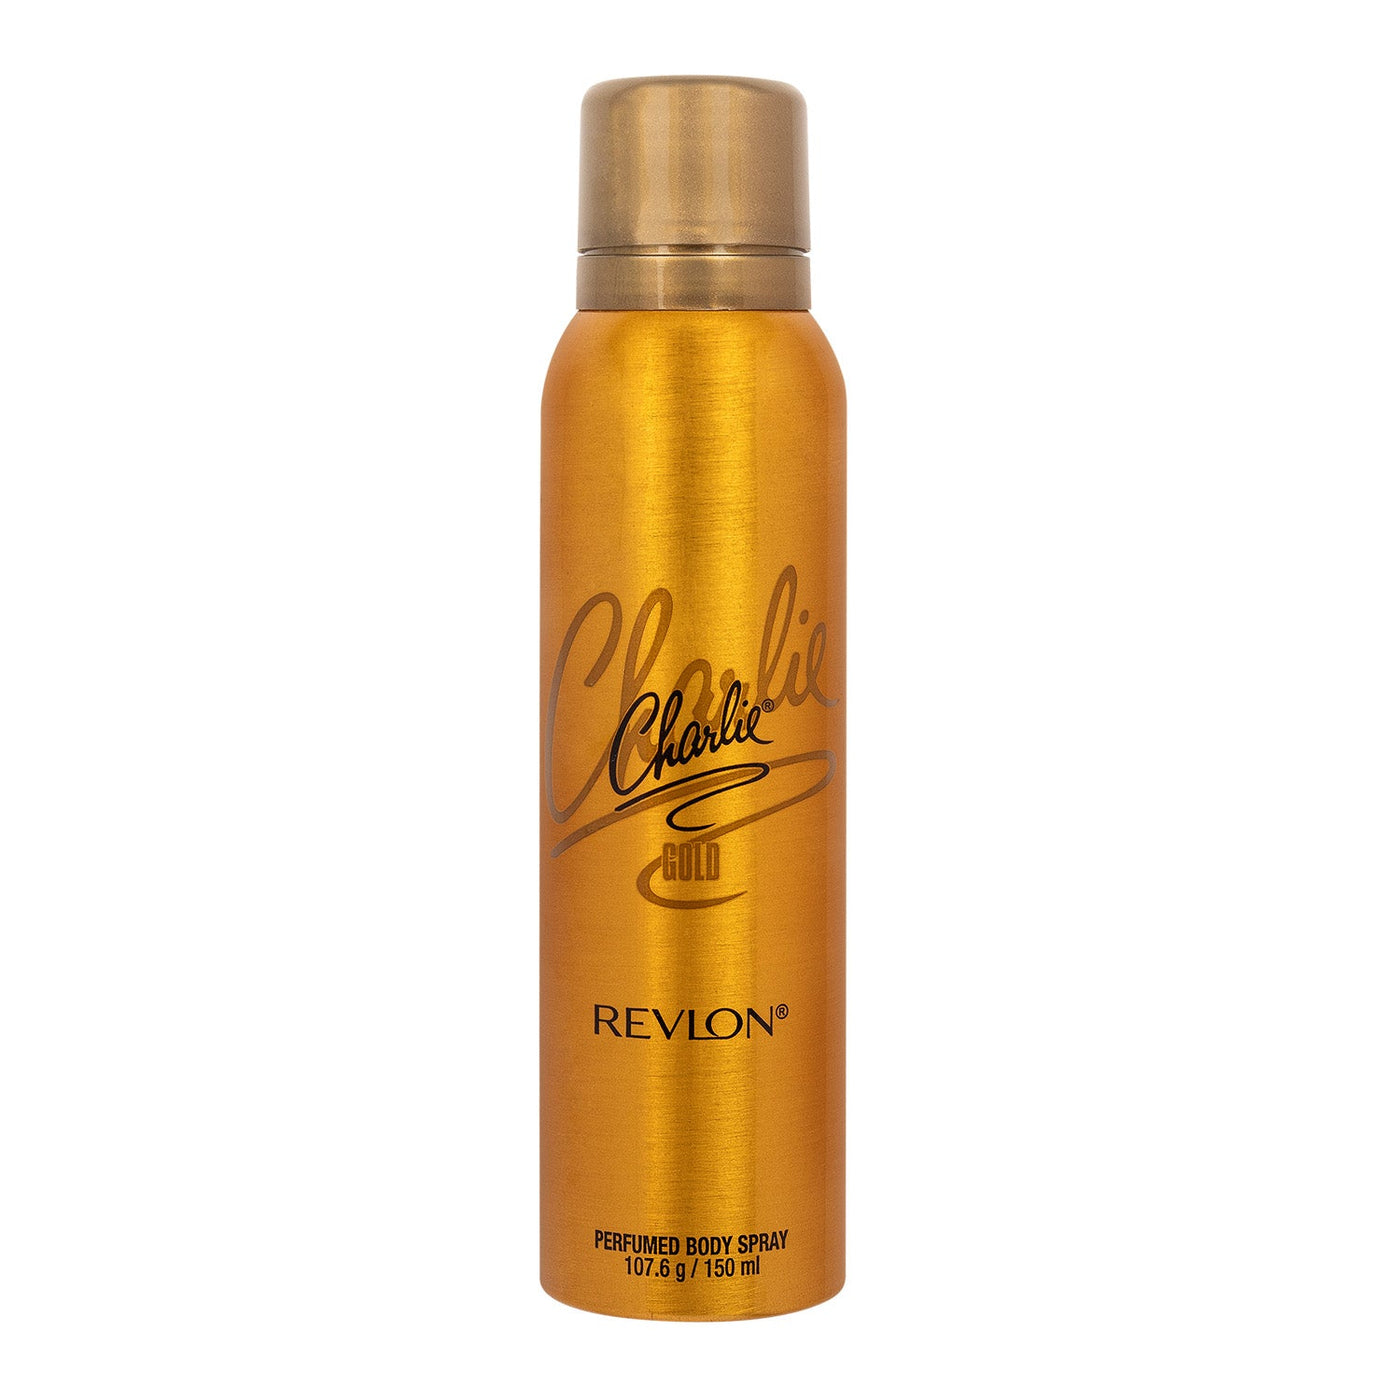 » Charlie Gold Perfumed Body Spray (100% off)